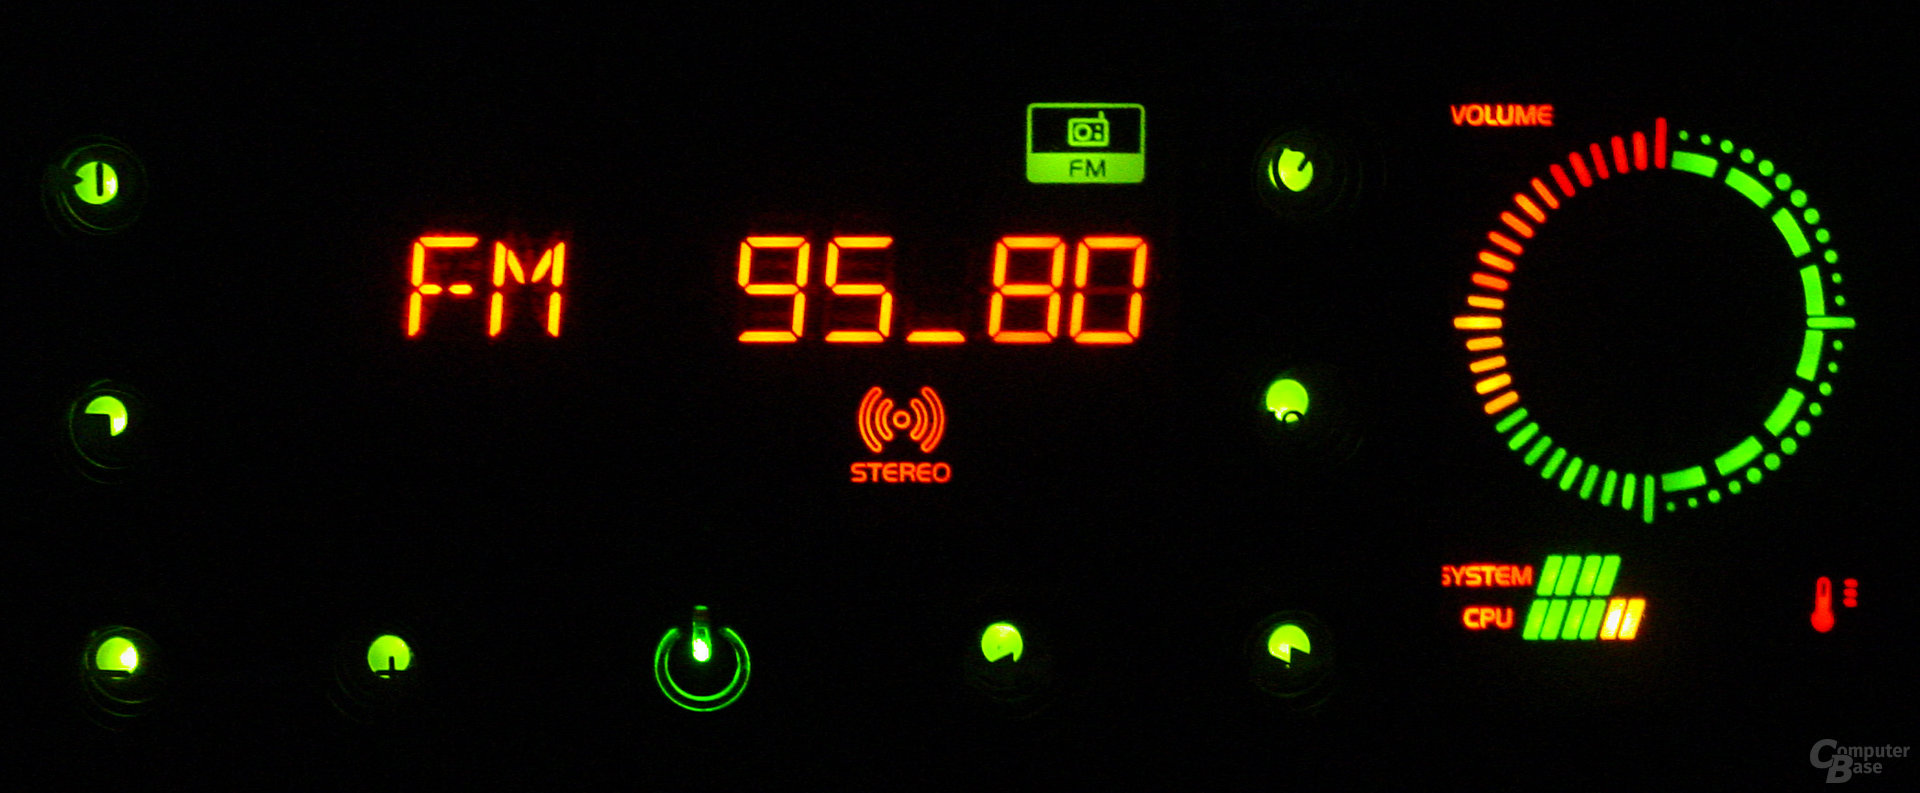 Asus S-presso S1-P111 Deluxe - Display - Radio-Wiedergabe